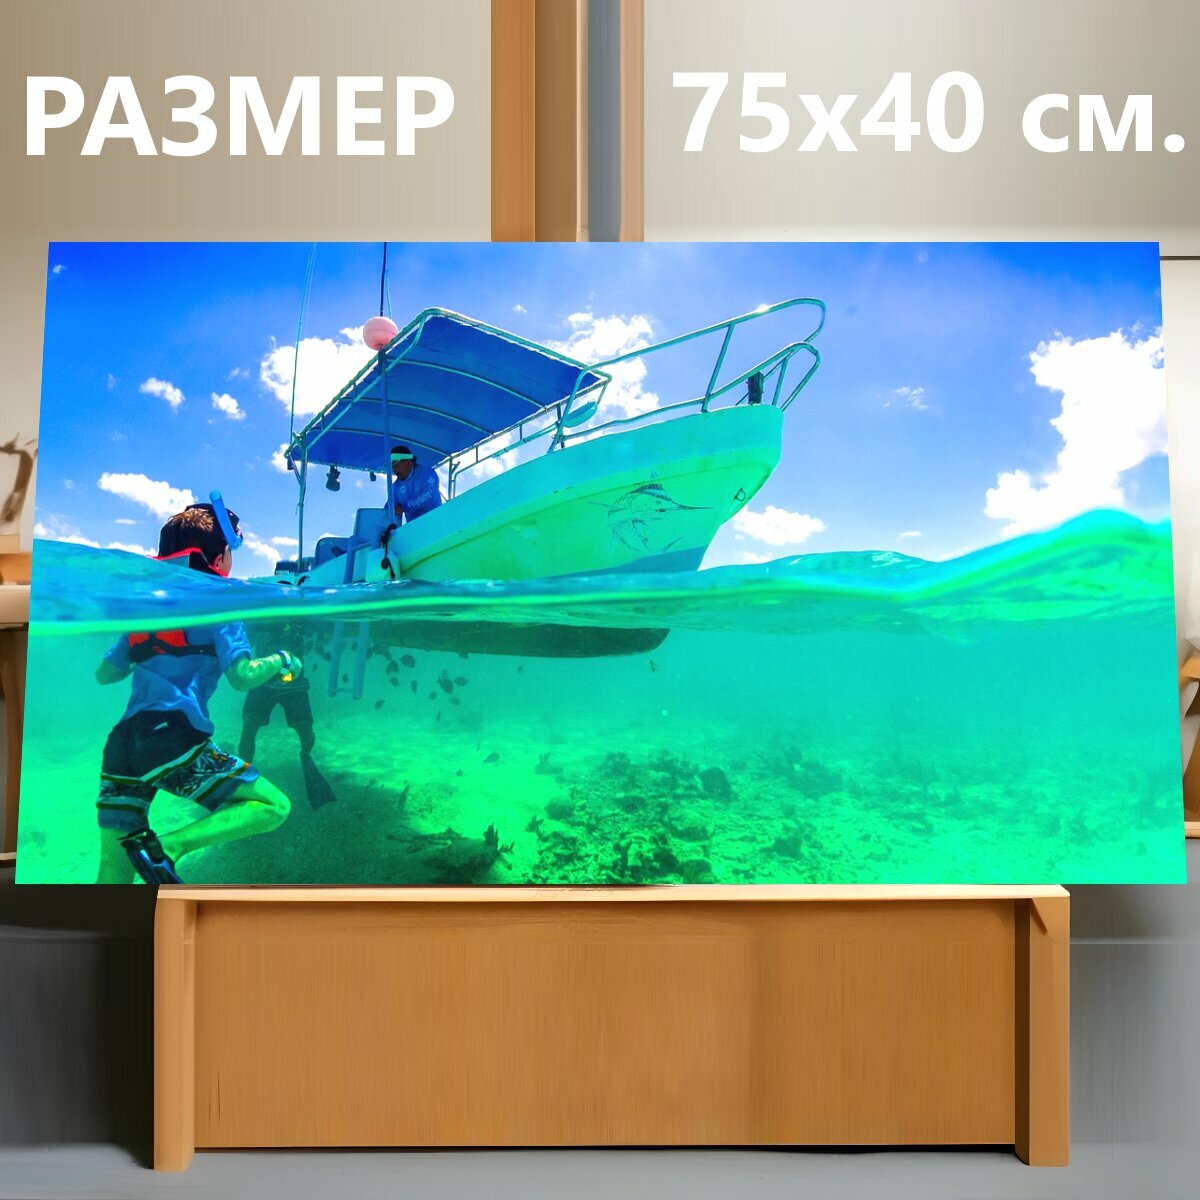 Картина на холсте "Туризм, лодка, канкун" на подрамнике 75х40 см. для интерьера